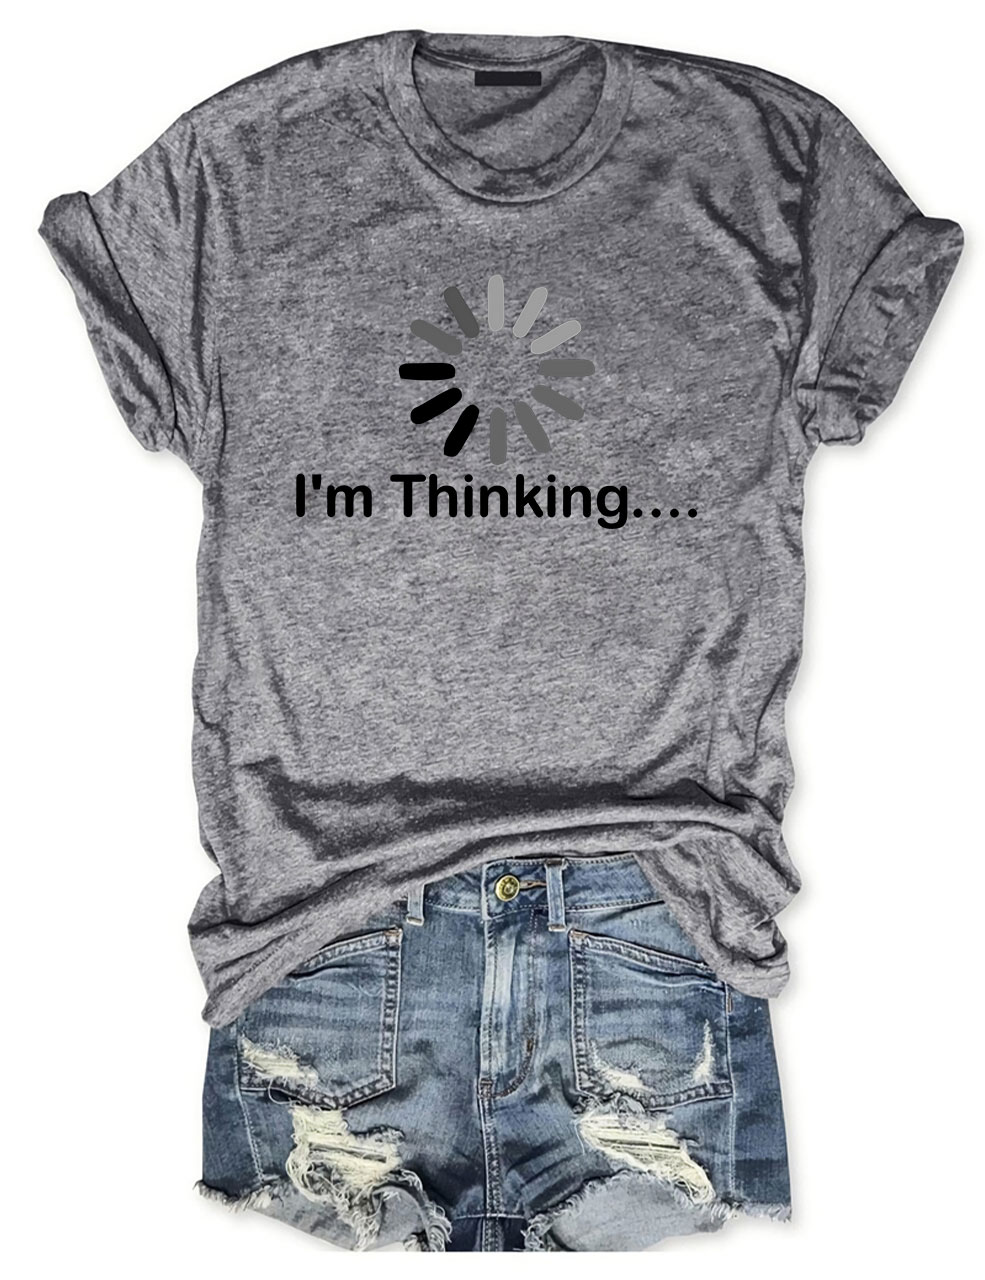 I'm Thinking T-shirt